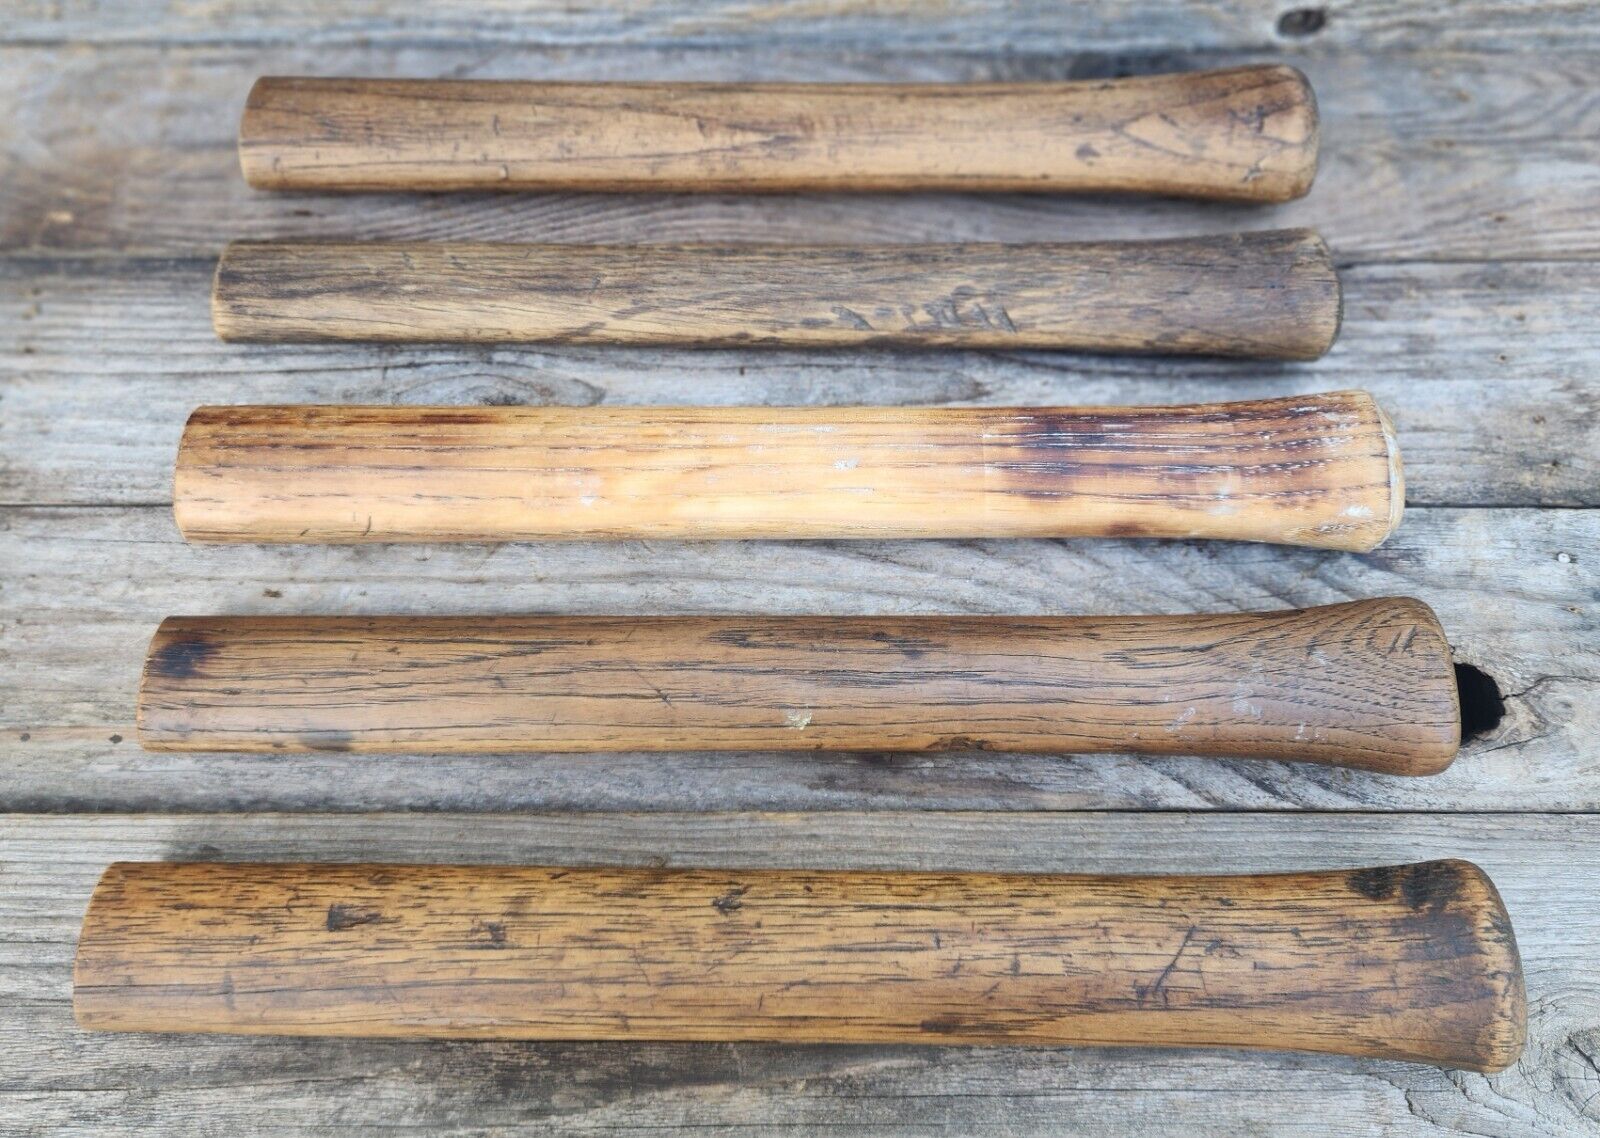 Lot of 5 Straight Handles - Hammer, Tools, Hatchets Hardwood Vintage Wood Crafts